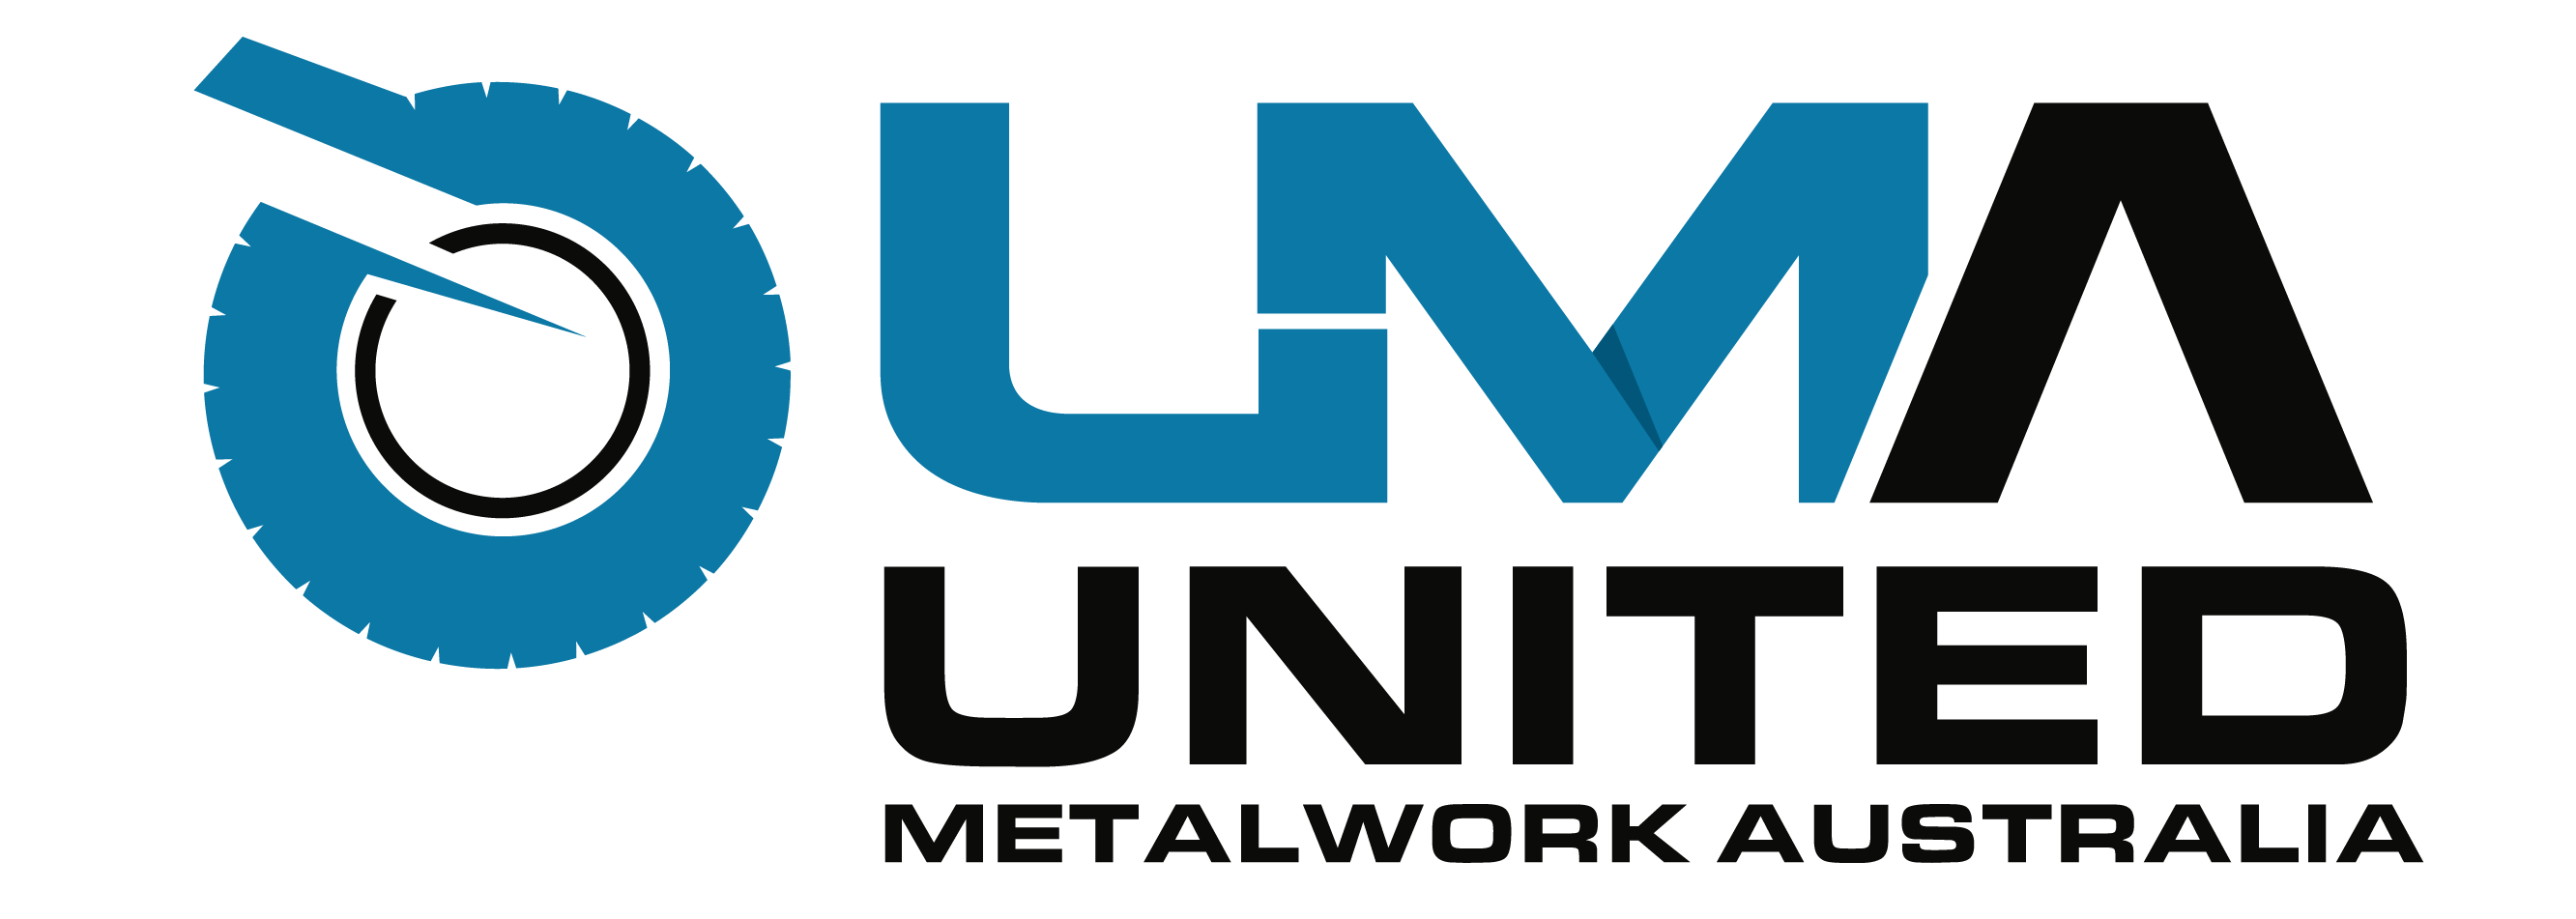 #1 metalwork services in perth | Australia